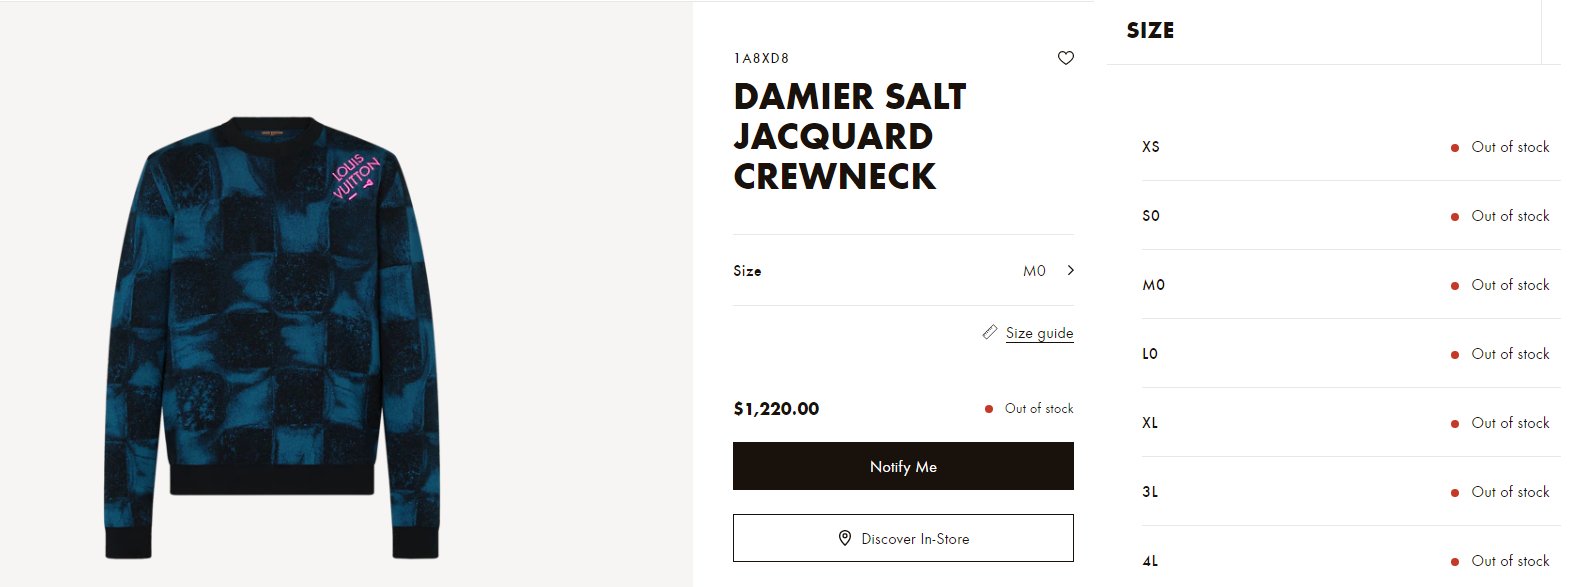 Louis Vuitton Damier Salt Jacquard Crewneck Sweater